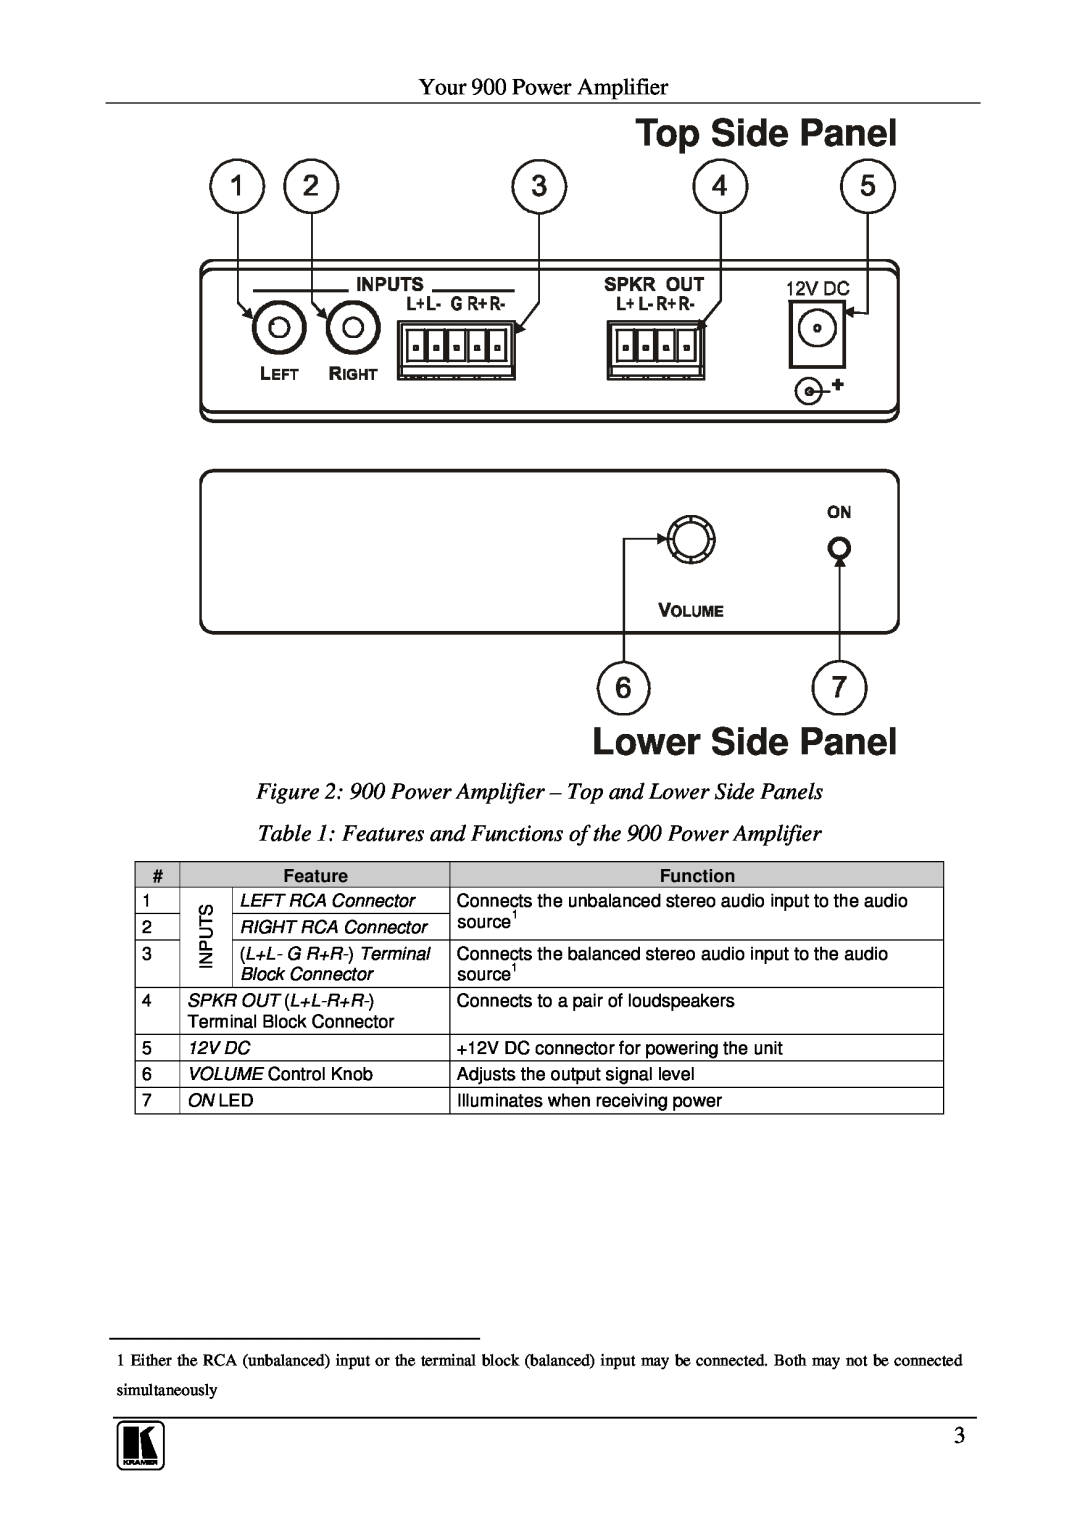 Kramer Electronics user manual Top Side Panel Lower Side Panel, Your 900 Power Amplifier 